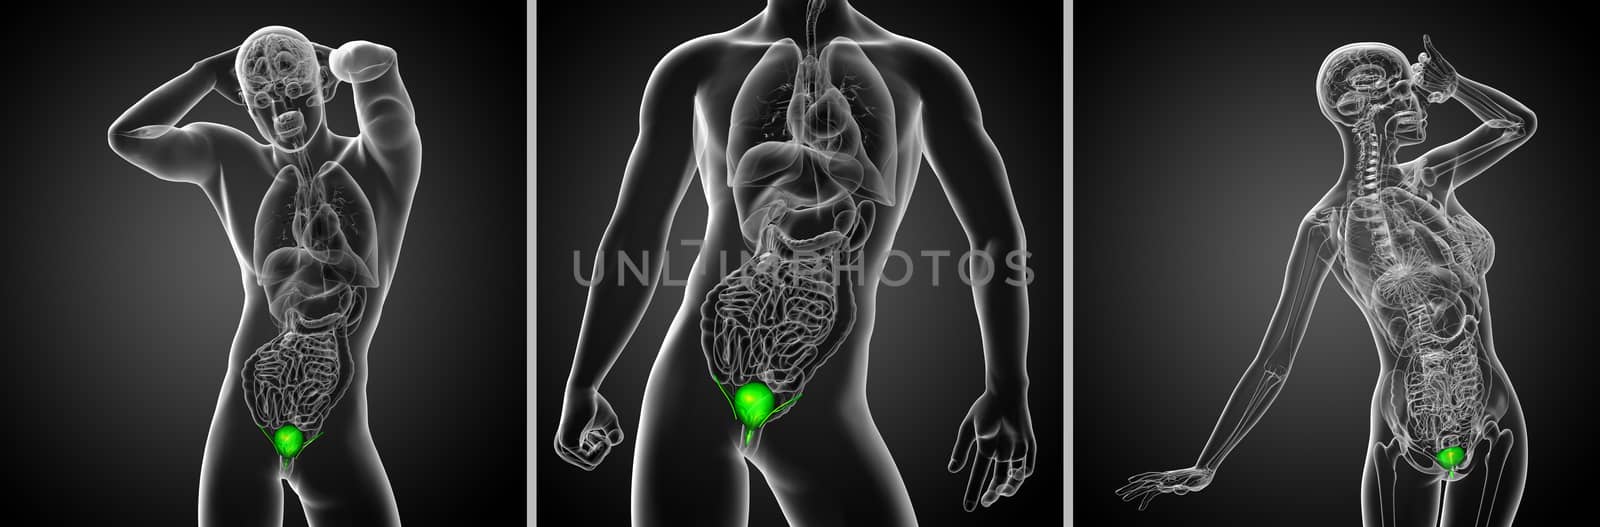 3d rendering  medical illustration of the bladder  by maya2008